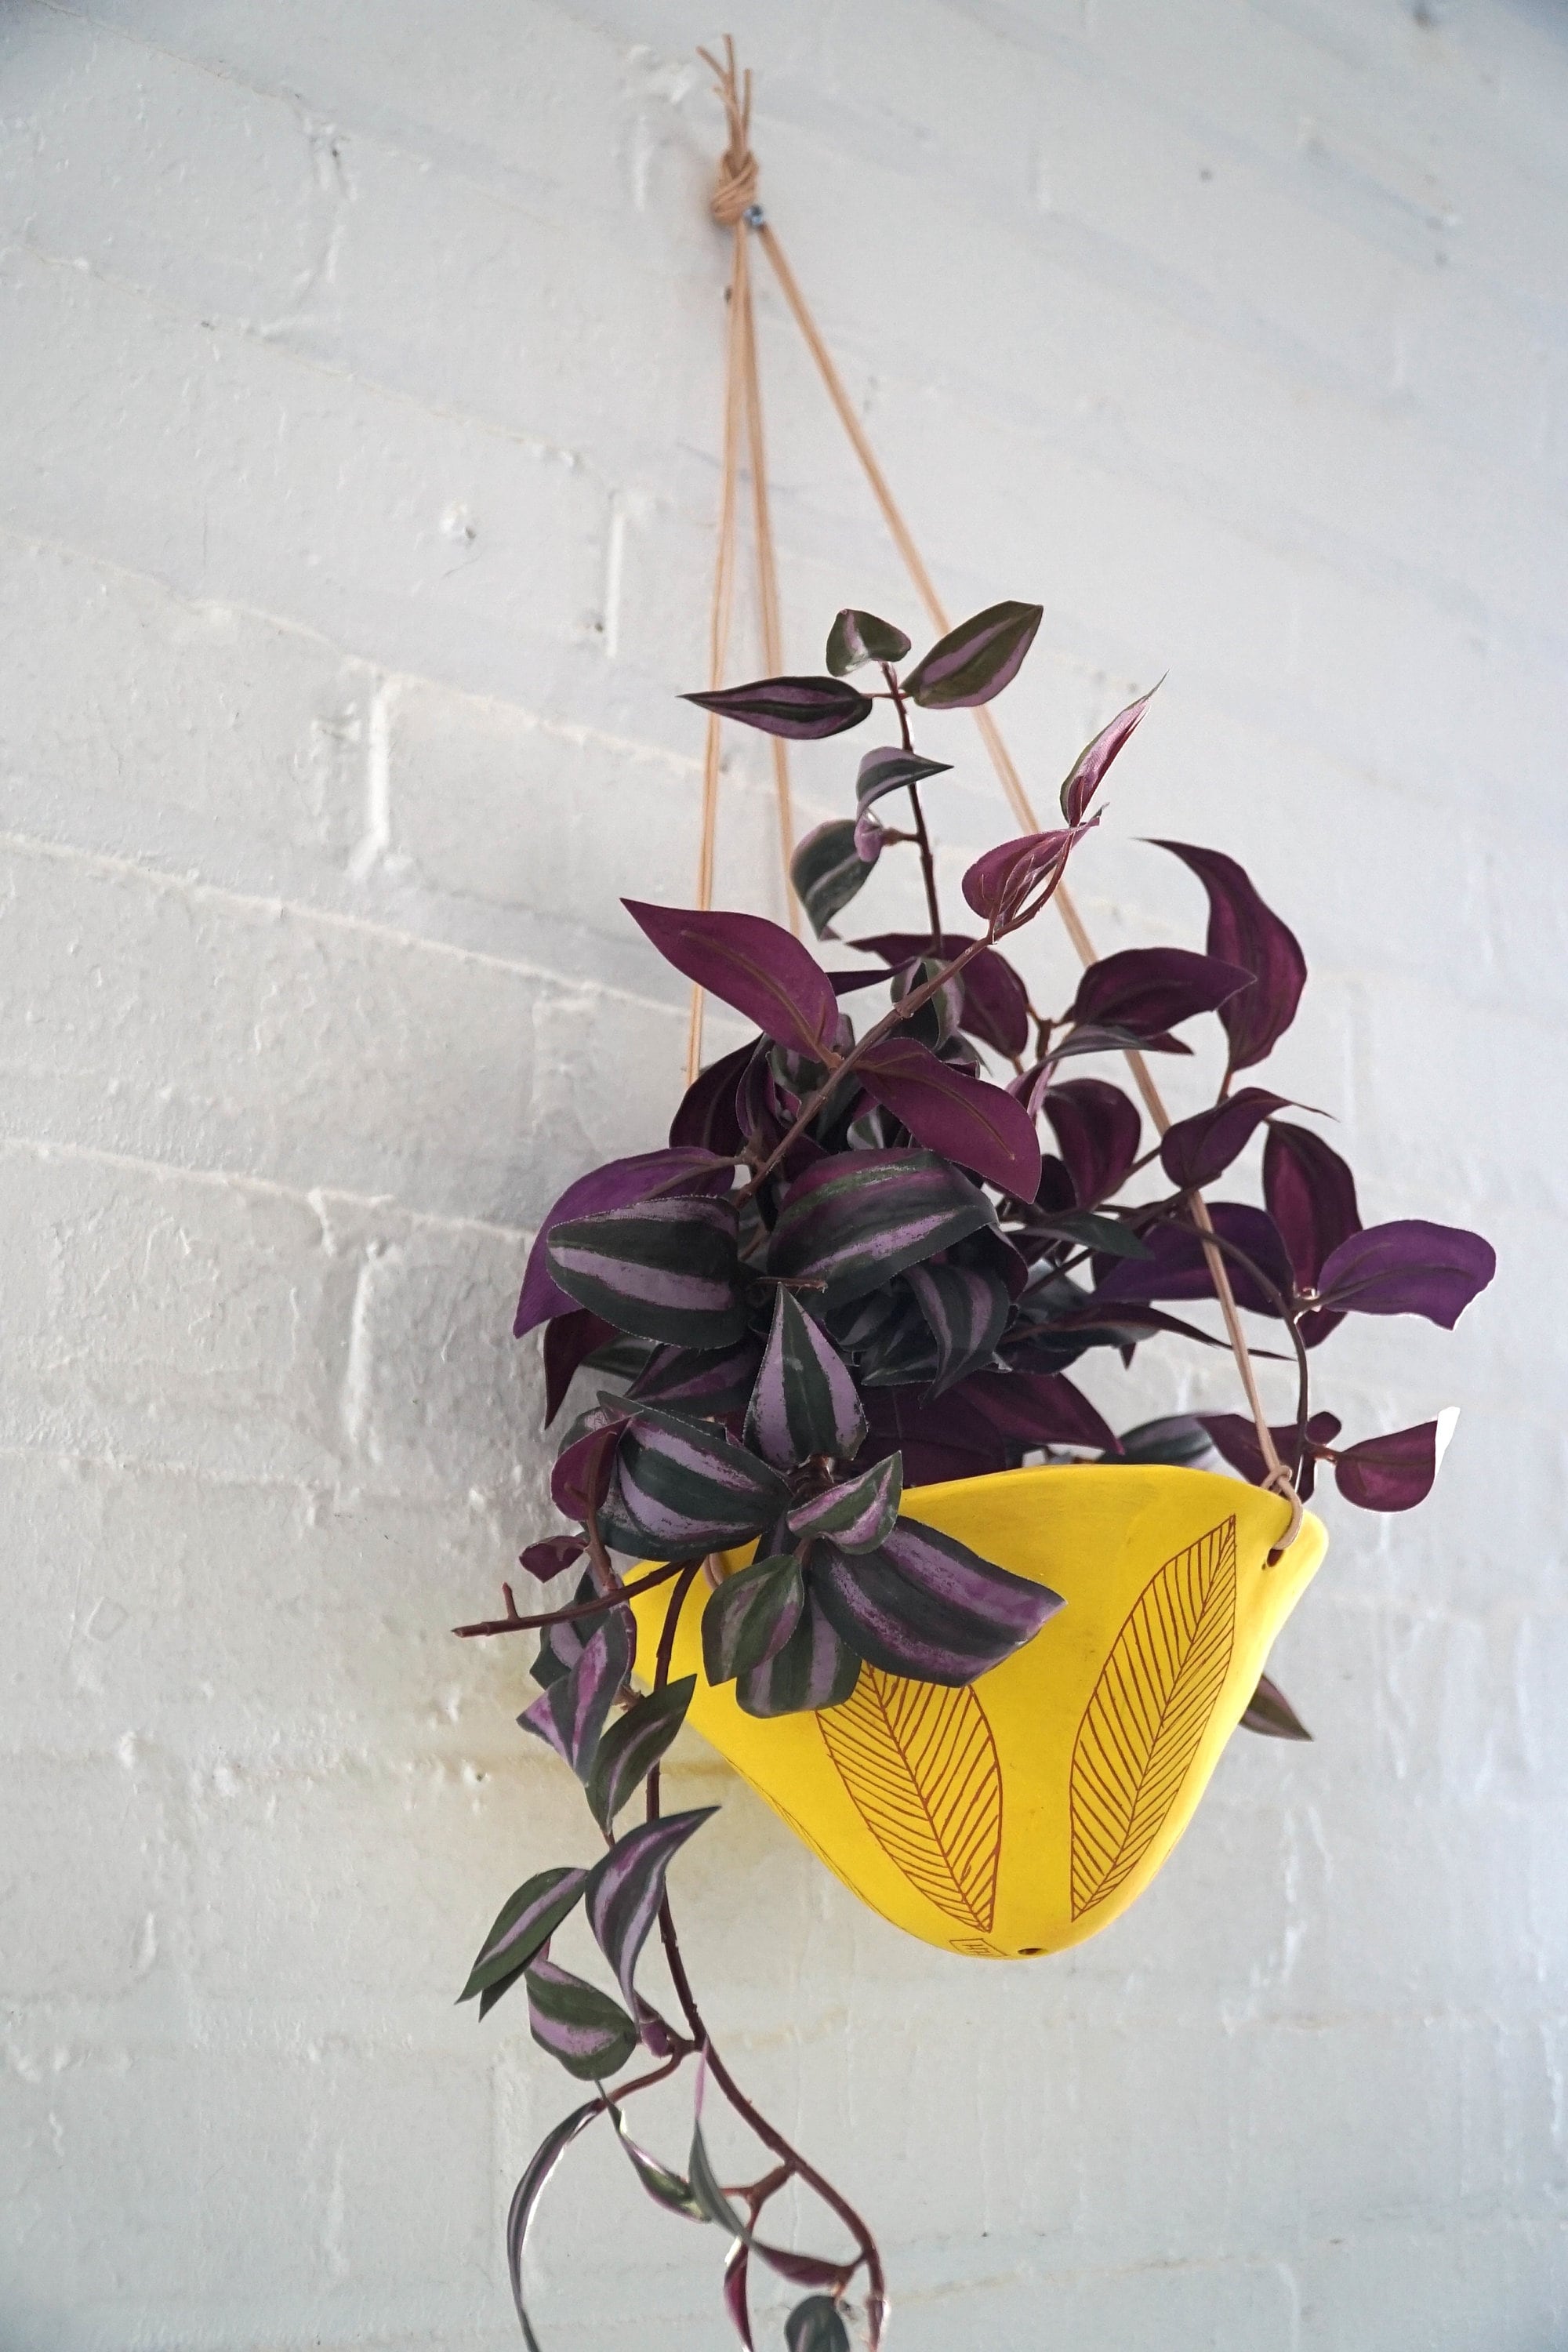 Bright Yellow & Terracotta Hanging Planter with Sgraffito "Leaf" Design - Bright Yellow Plant Hanger - Indoor Hanging Pot - Handmade Planter